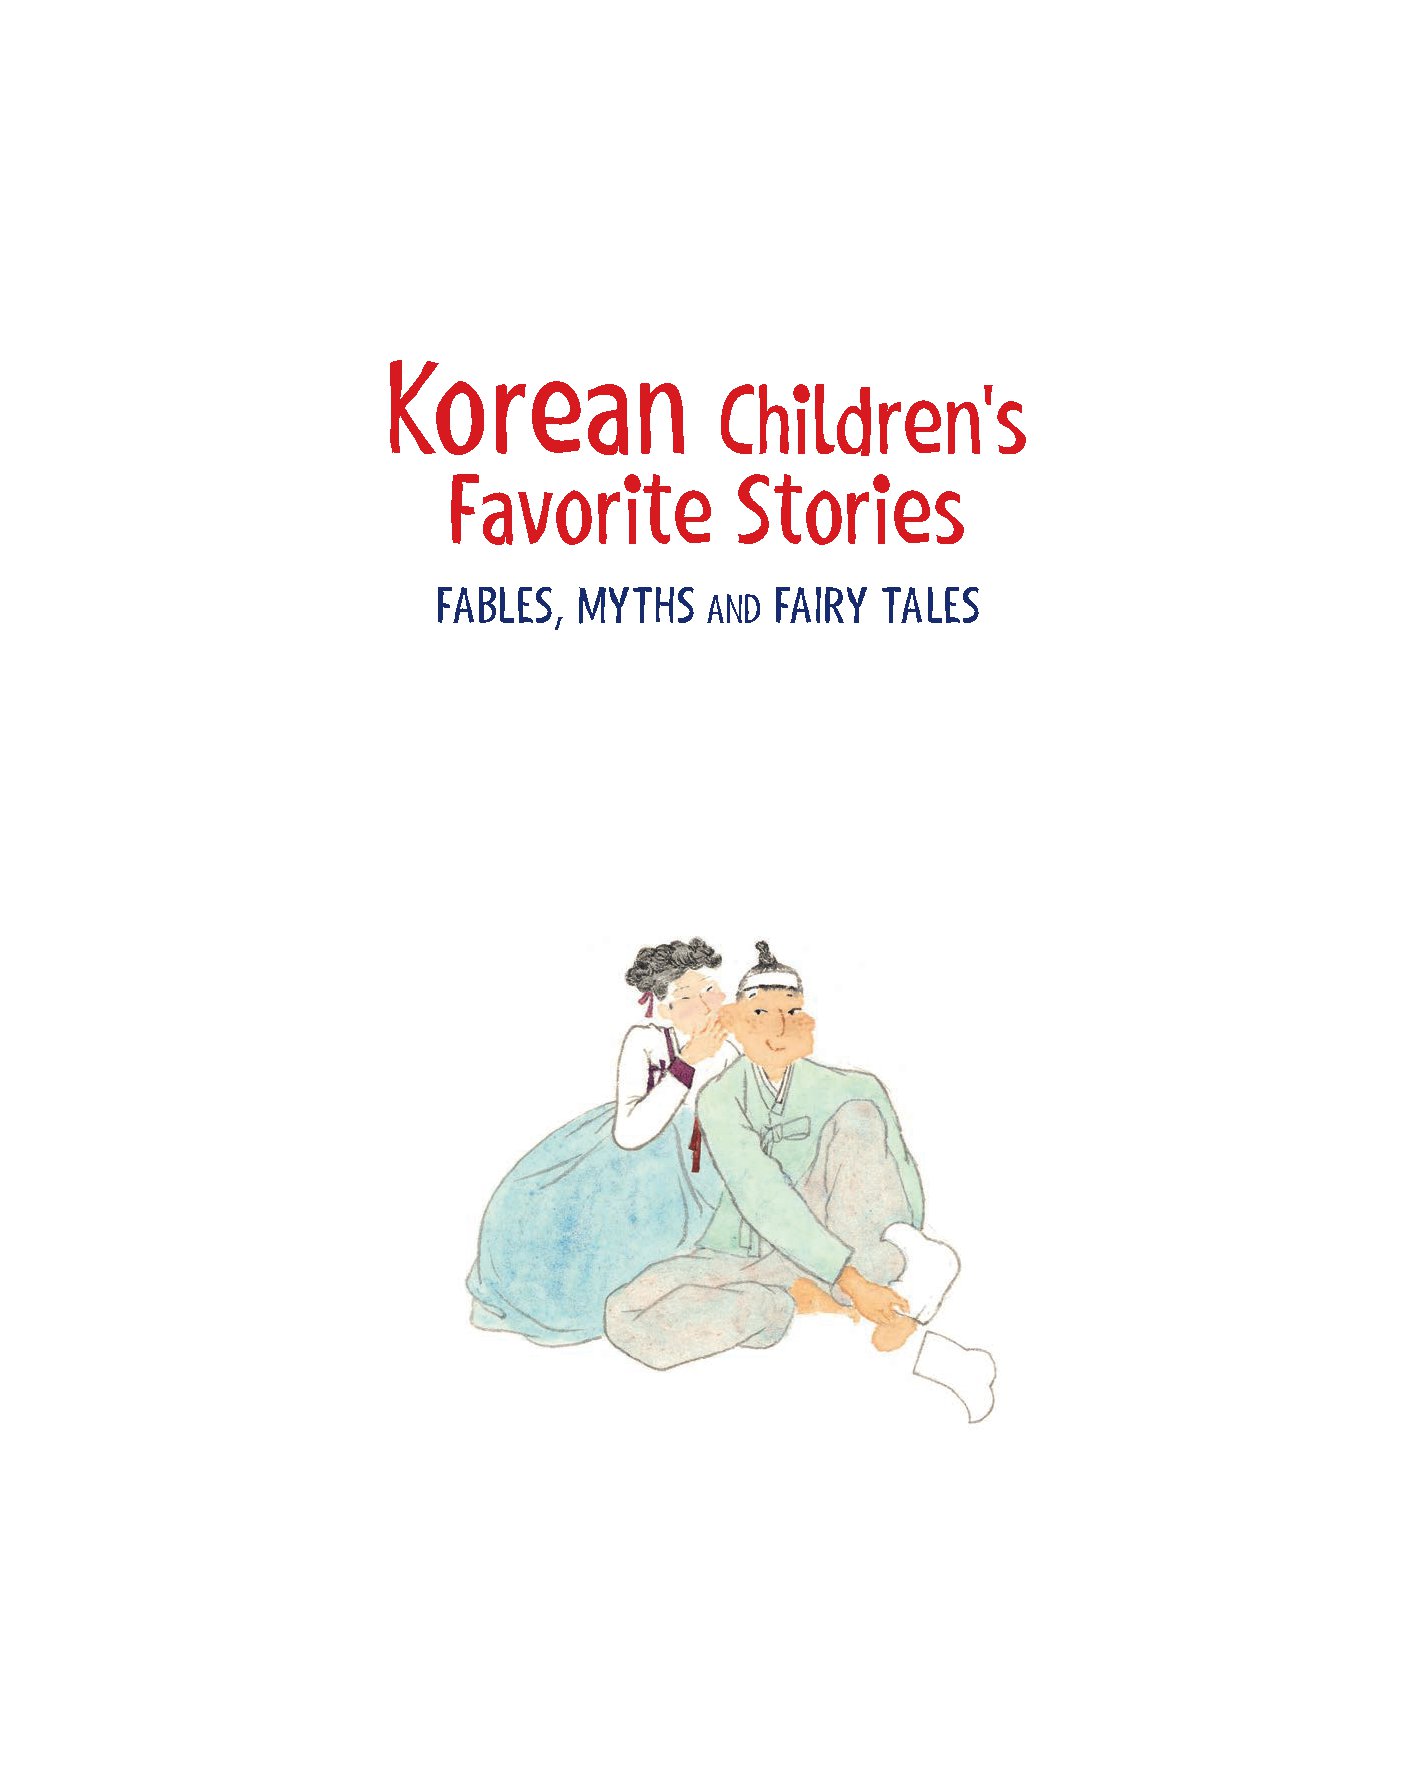 Korean Children's Favorite Stories